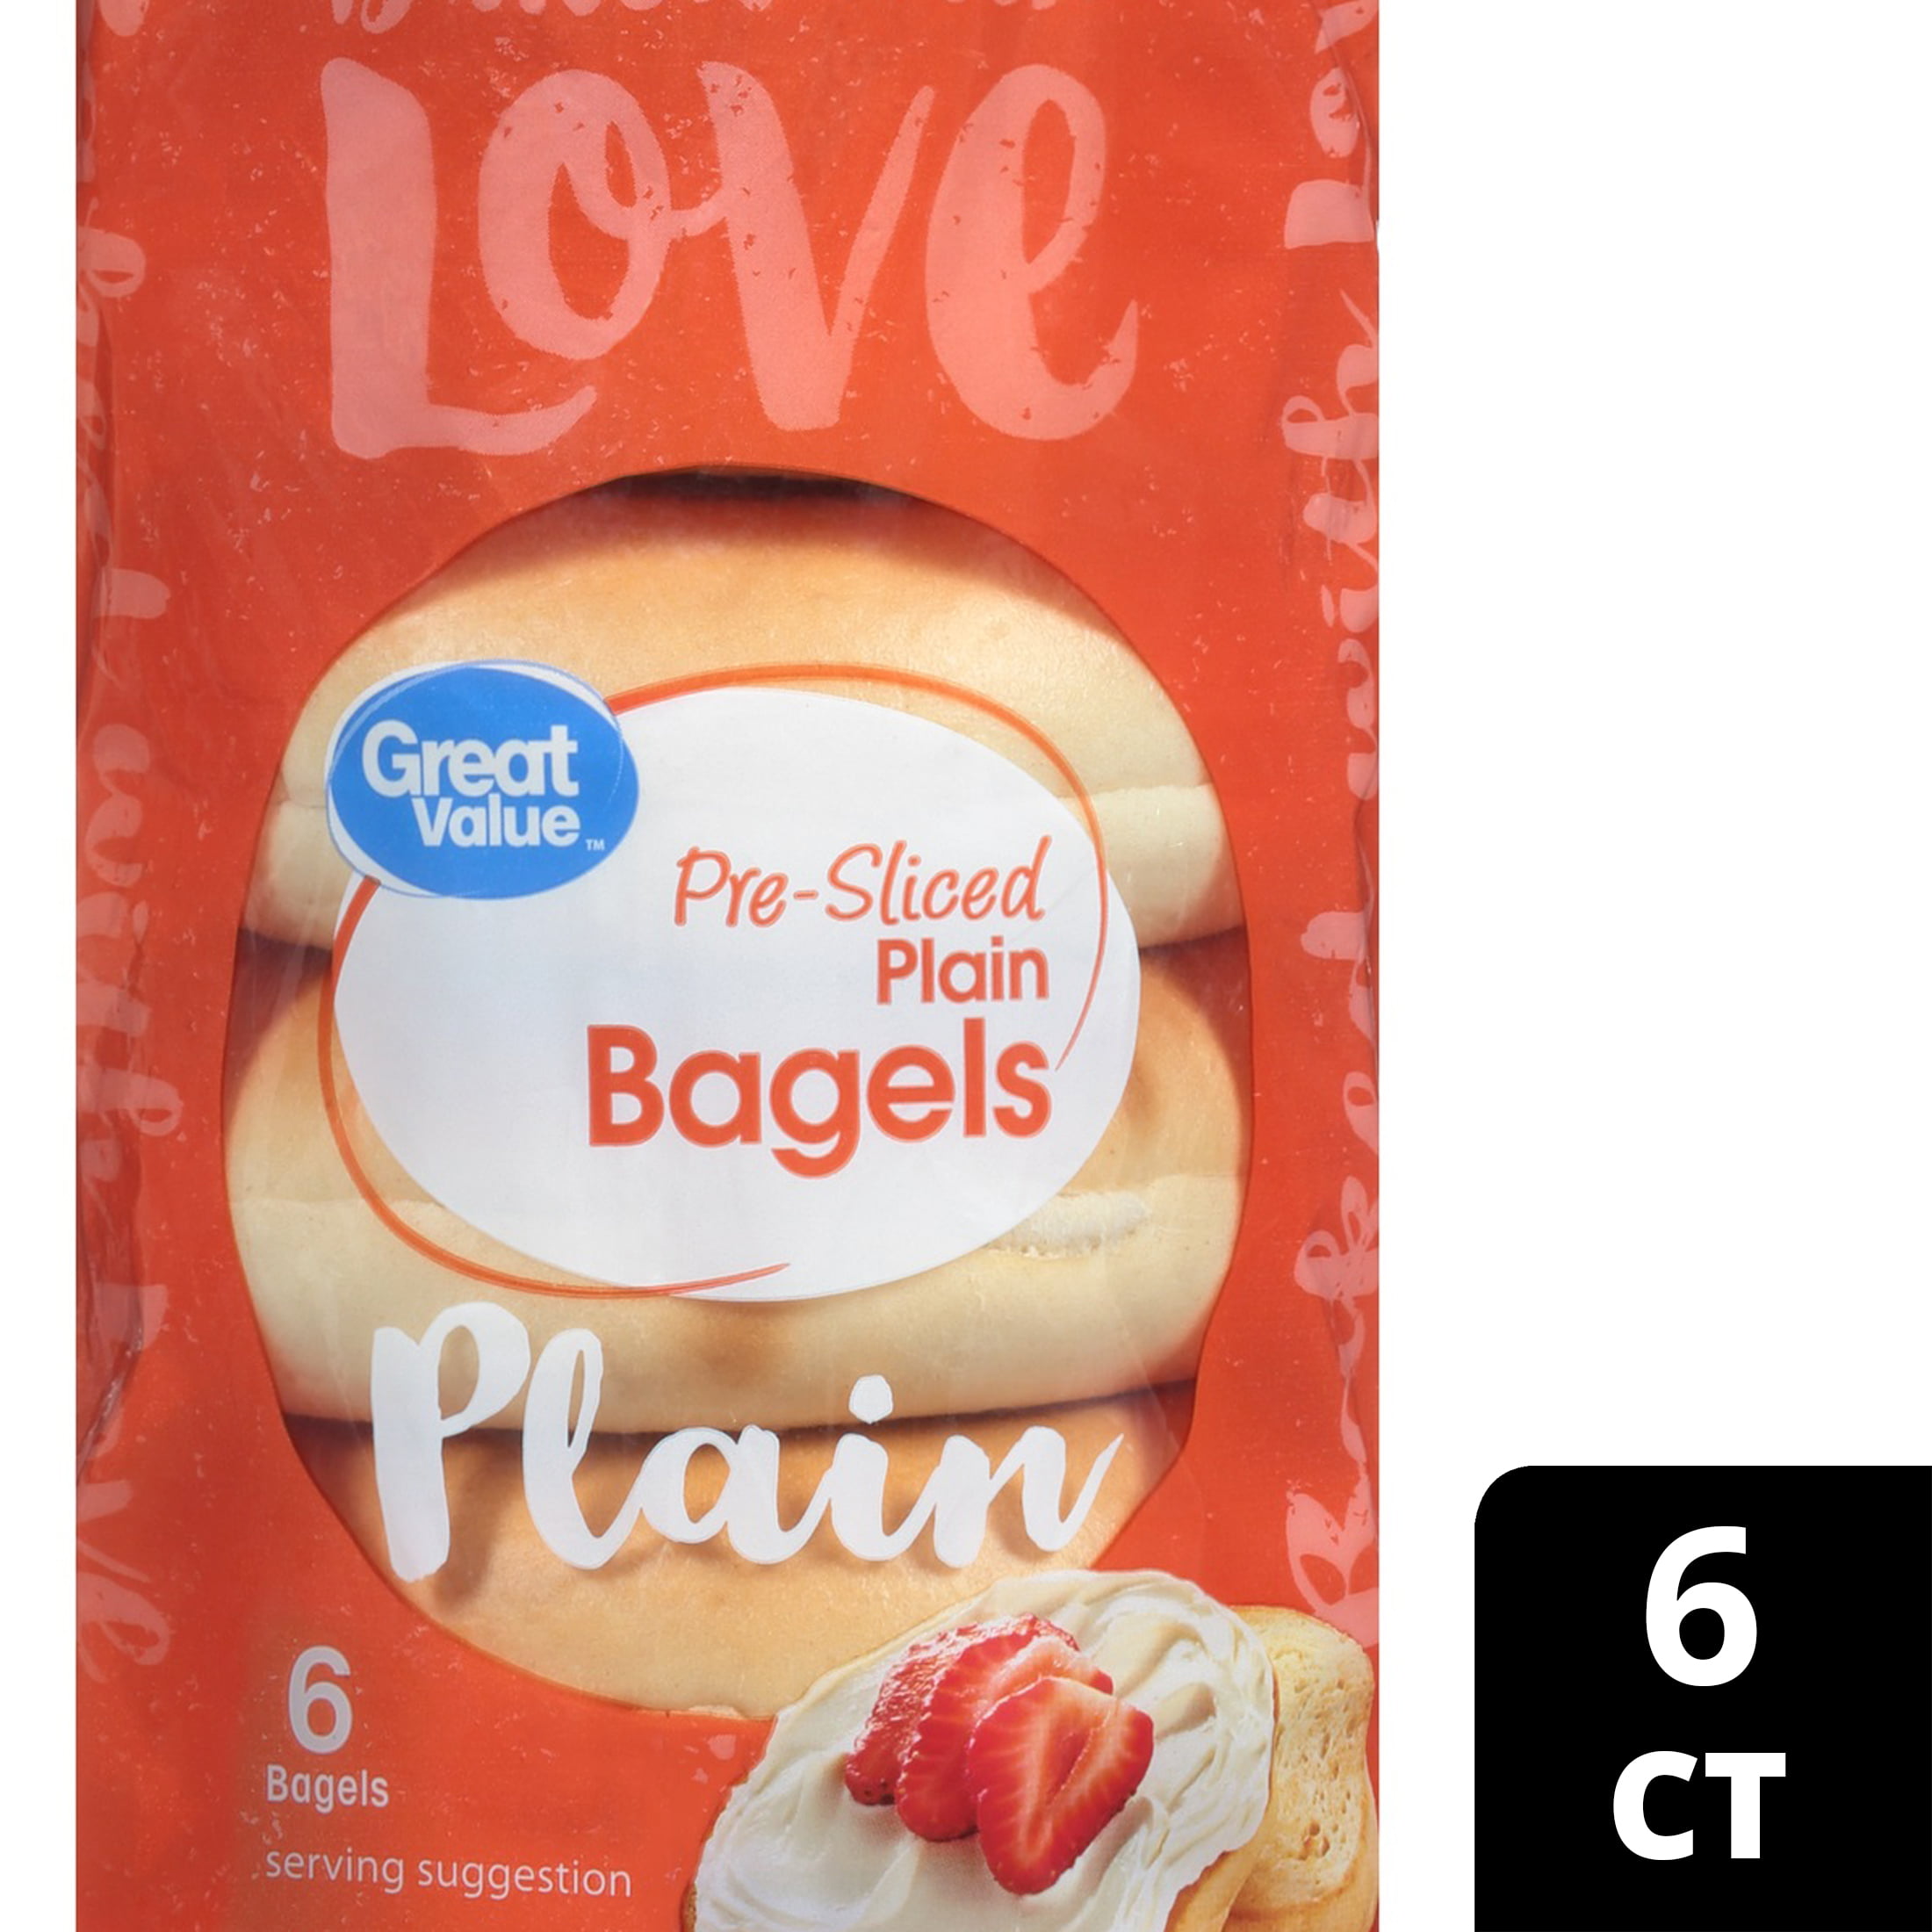 Great Value Pre-Sliced Plain Bagels, 20 oz, 6 Count